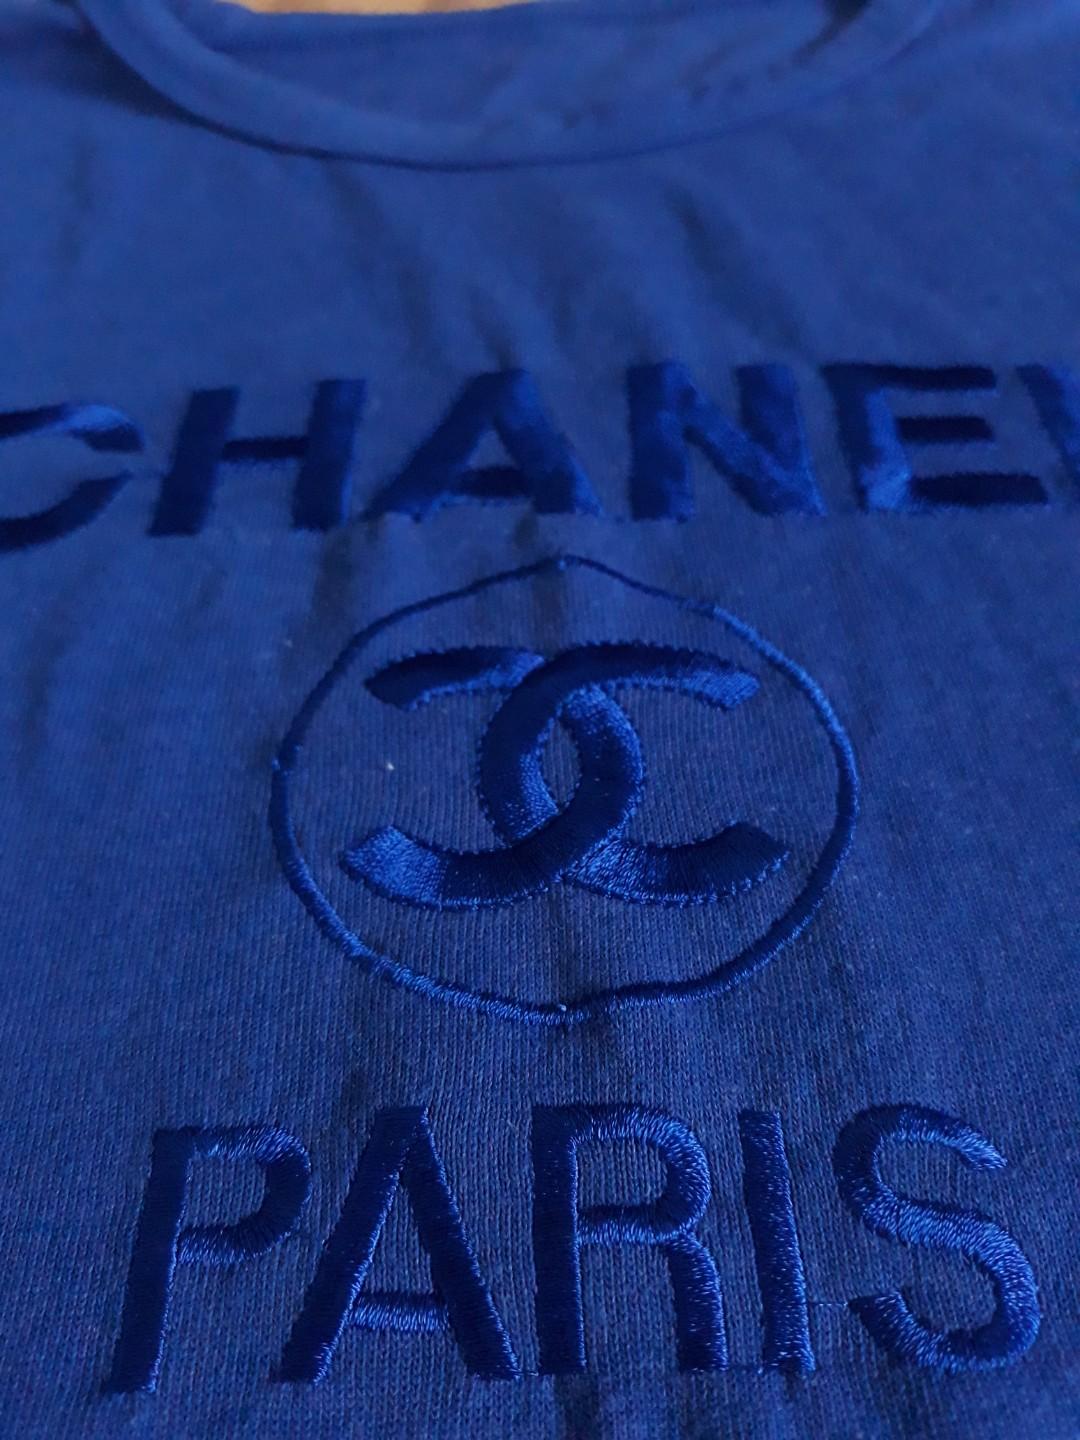 Shirts, Vtg 9s Chanel Paris Embroidered Bootleg Mens Red Xl Tshirt Single  Stitch